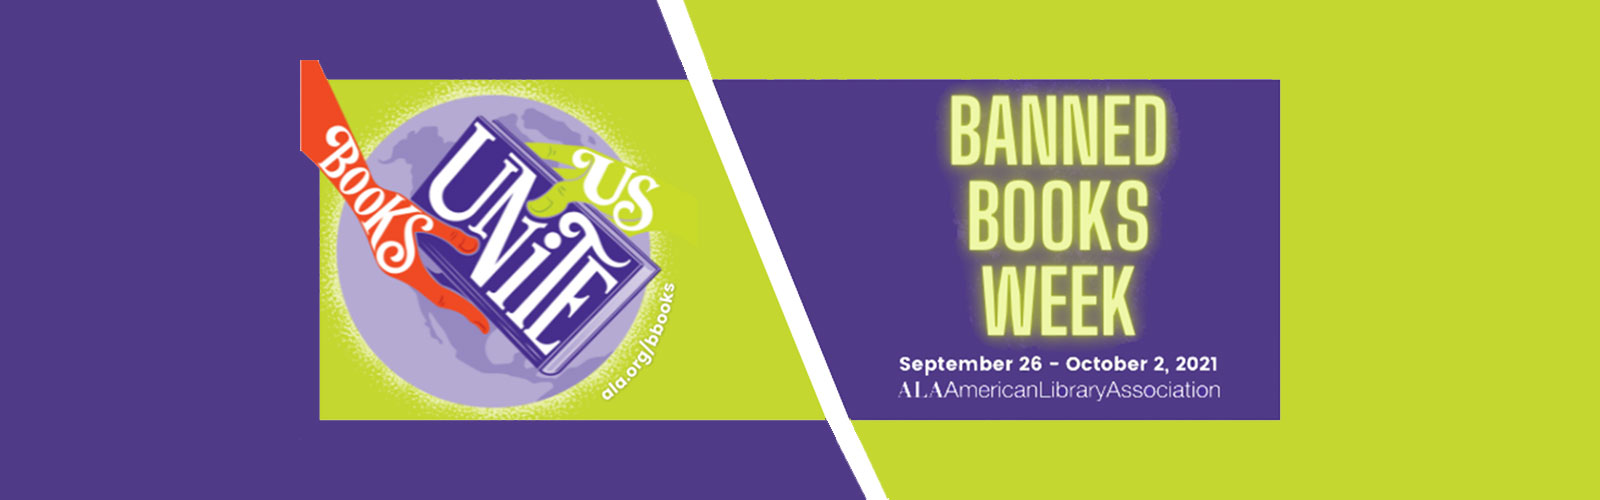 banned book week 2021 banner